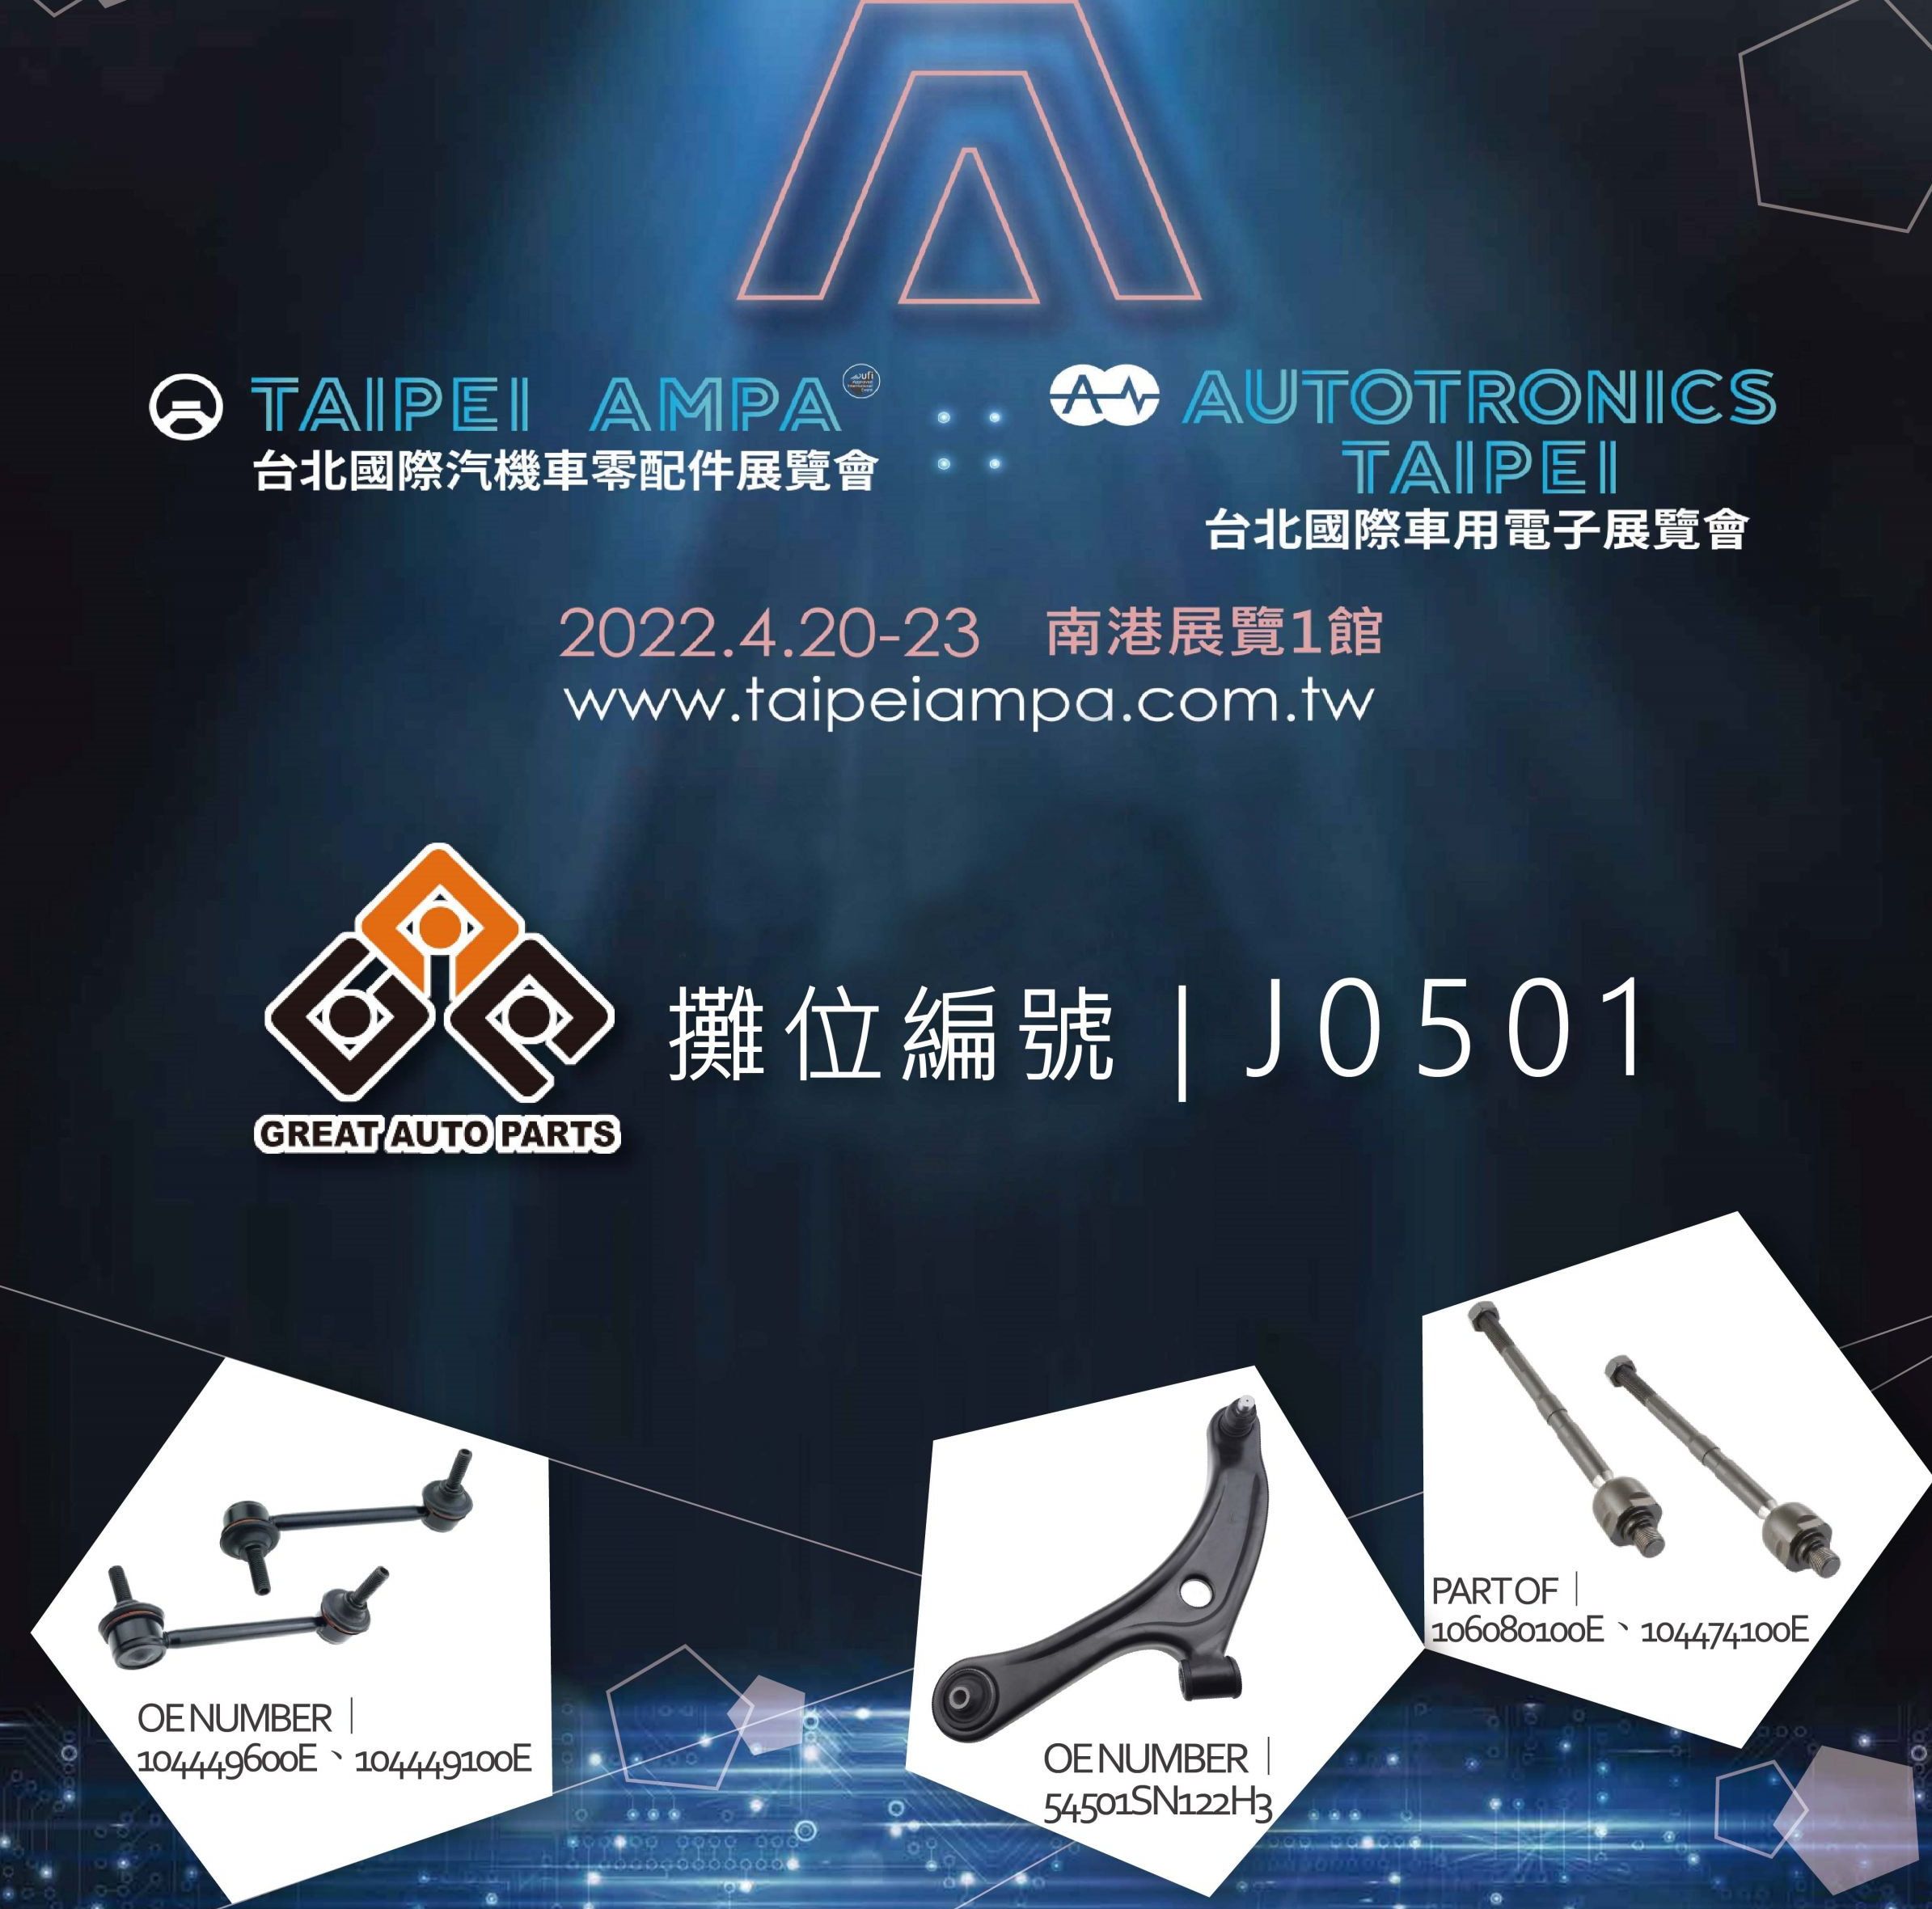 Taipei AMPA 2022 (Grandes Peças de Automóveis)